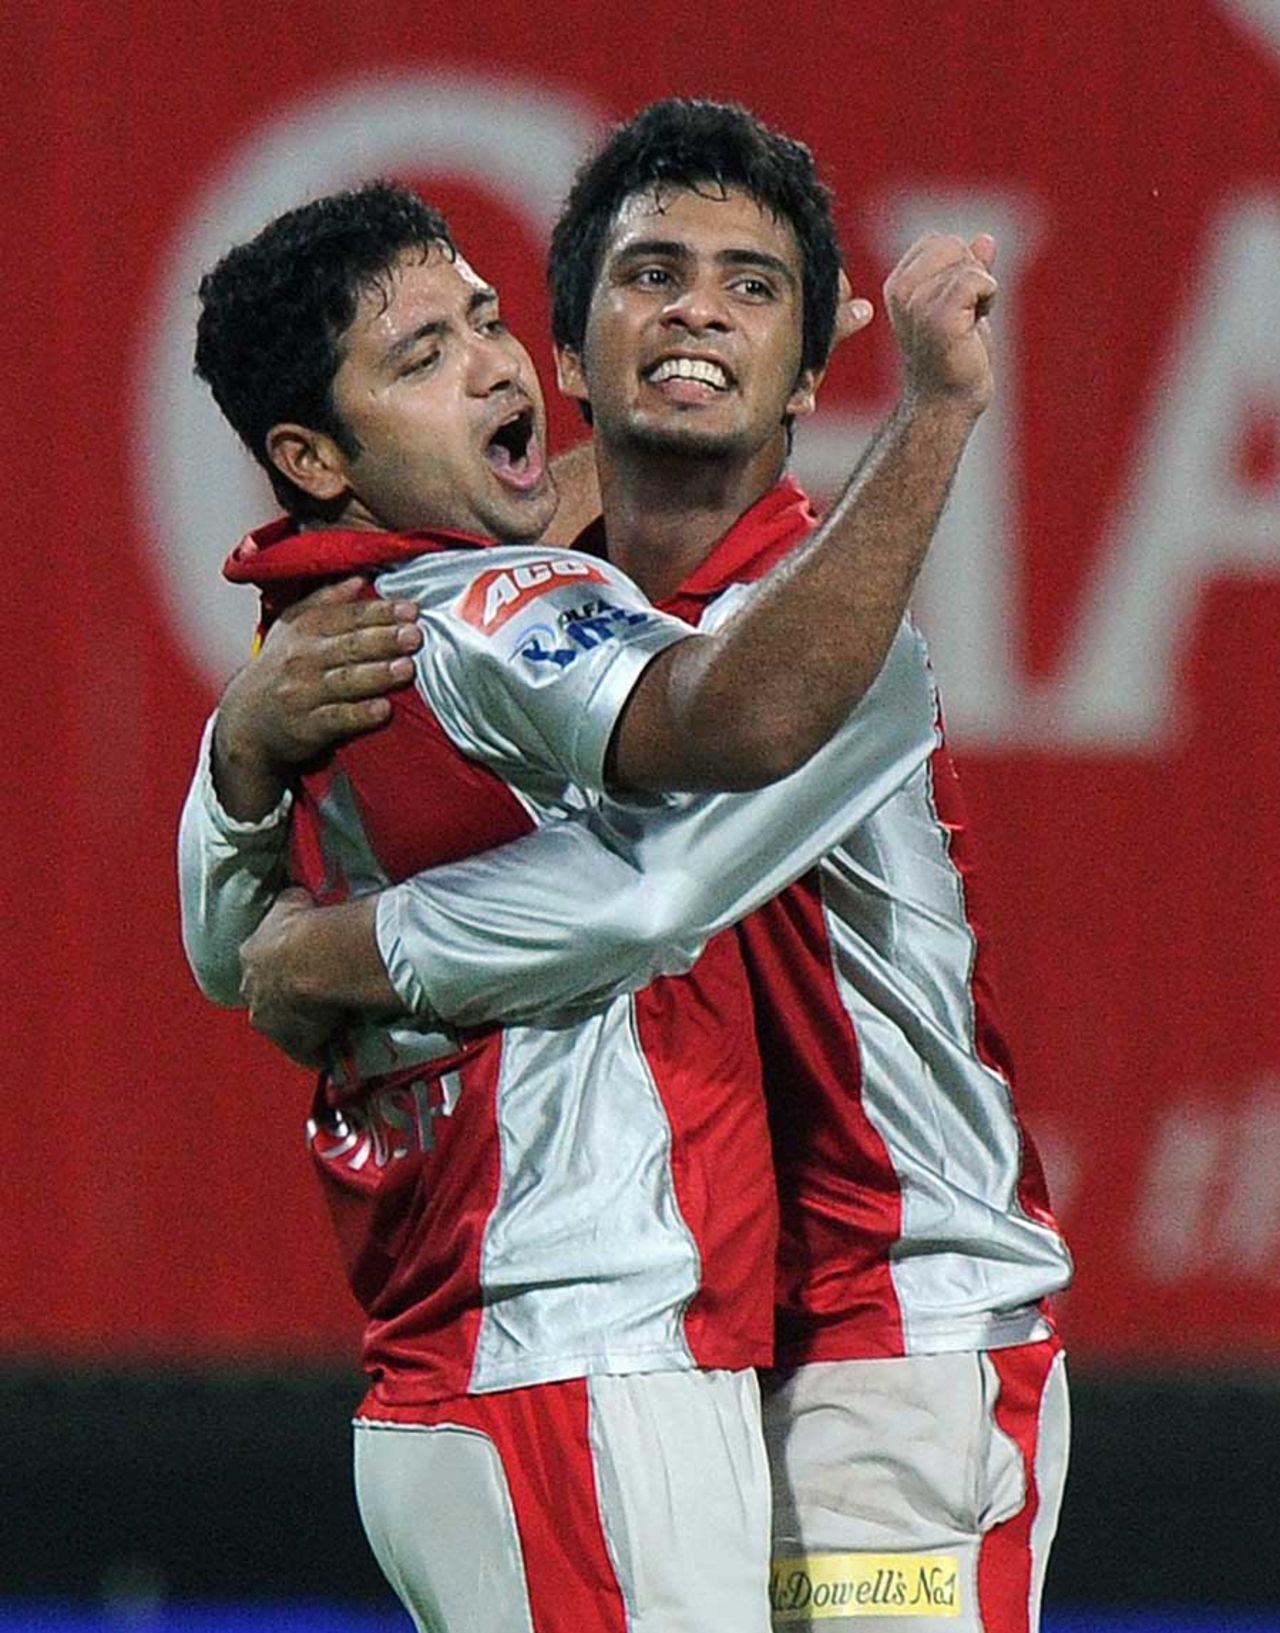 Piyush Chawla picked up three wickets, Kolkata Knight Riders v Kings XI Punjab, IPL 2012, Kolkata, April 15, 2012